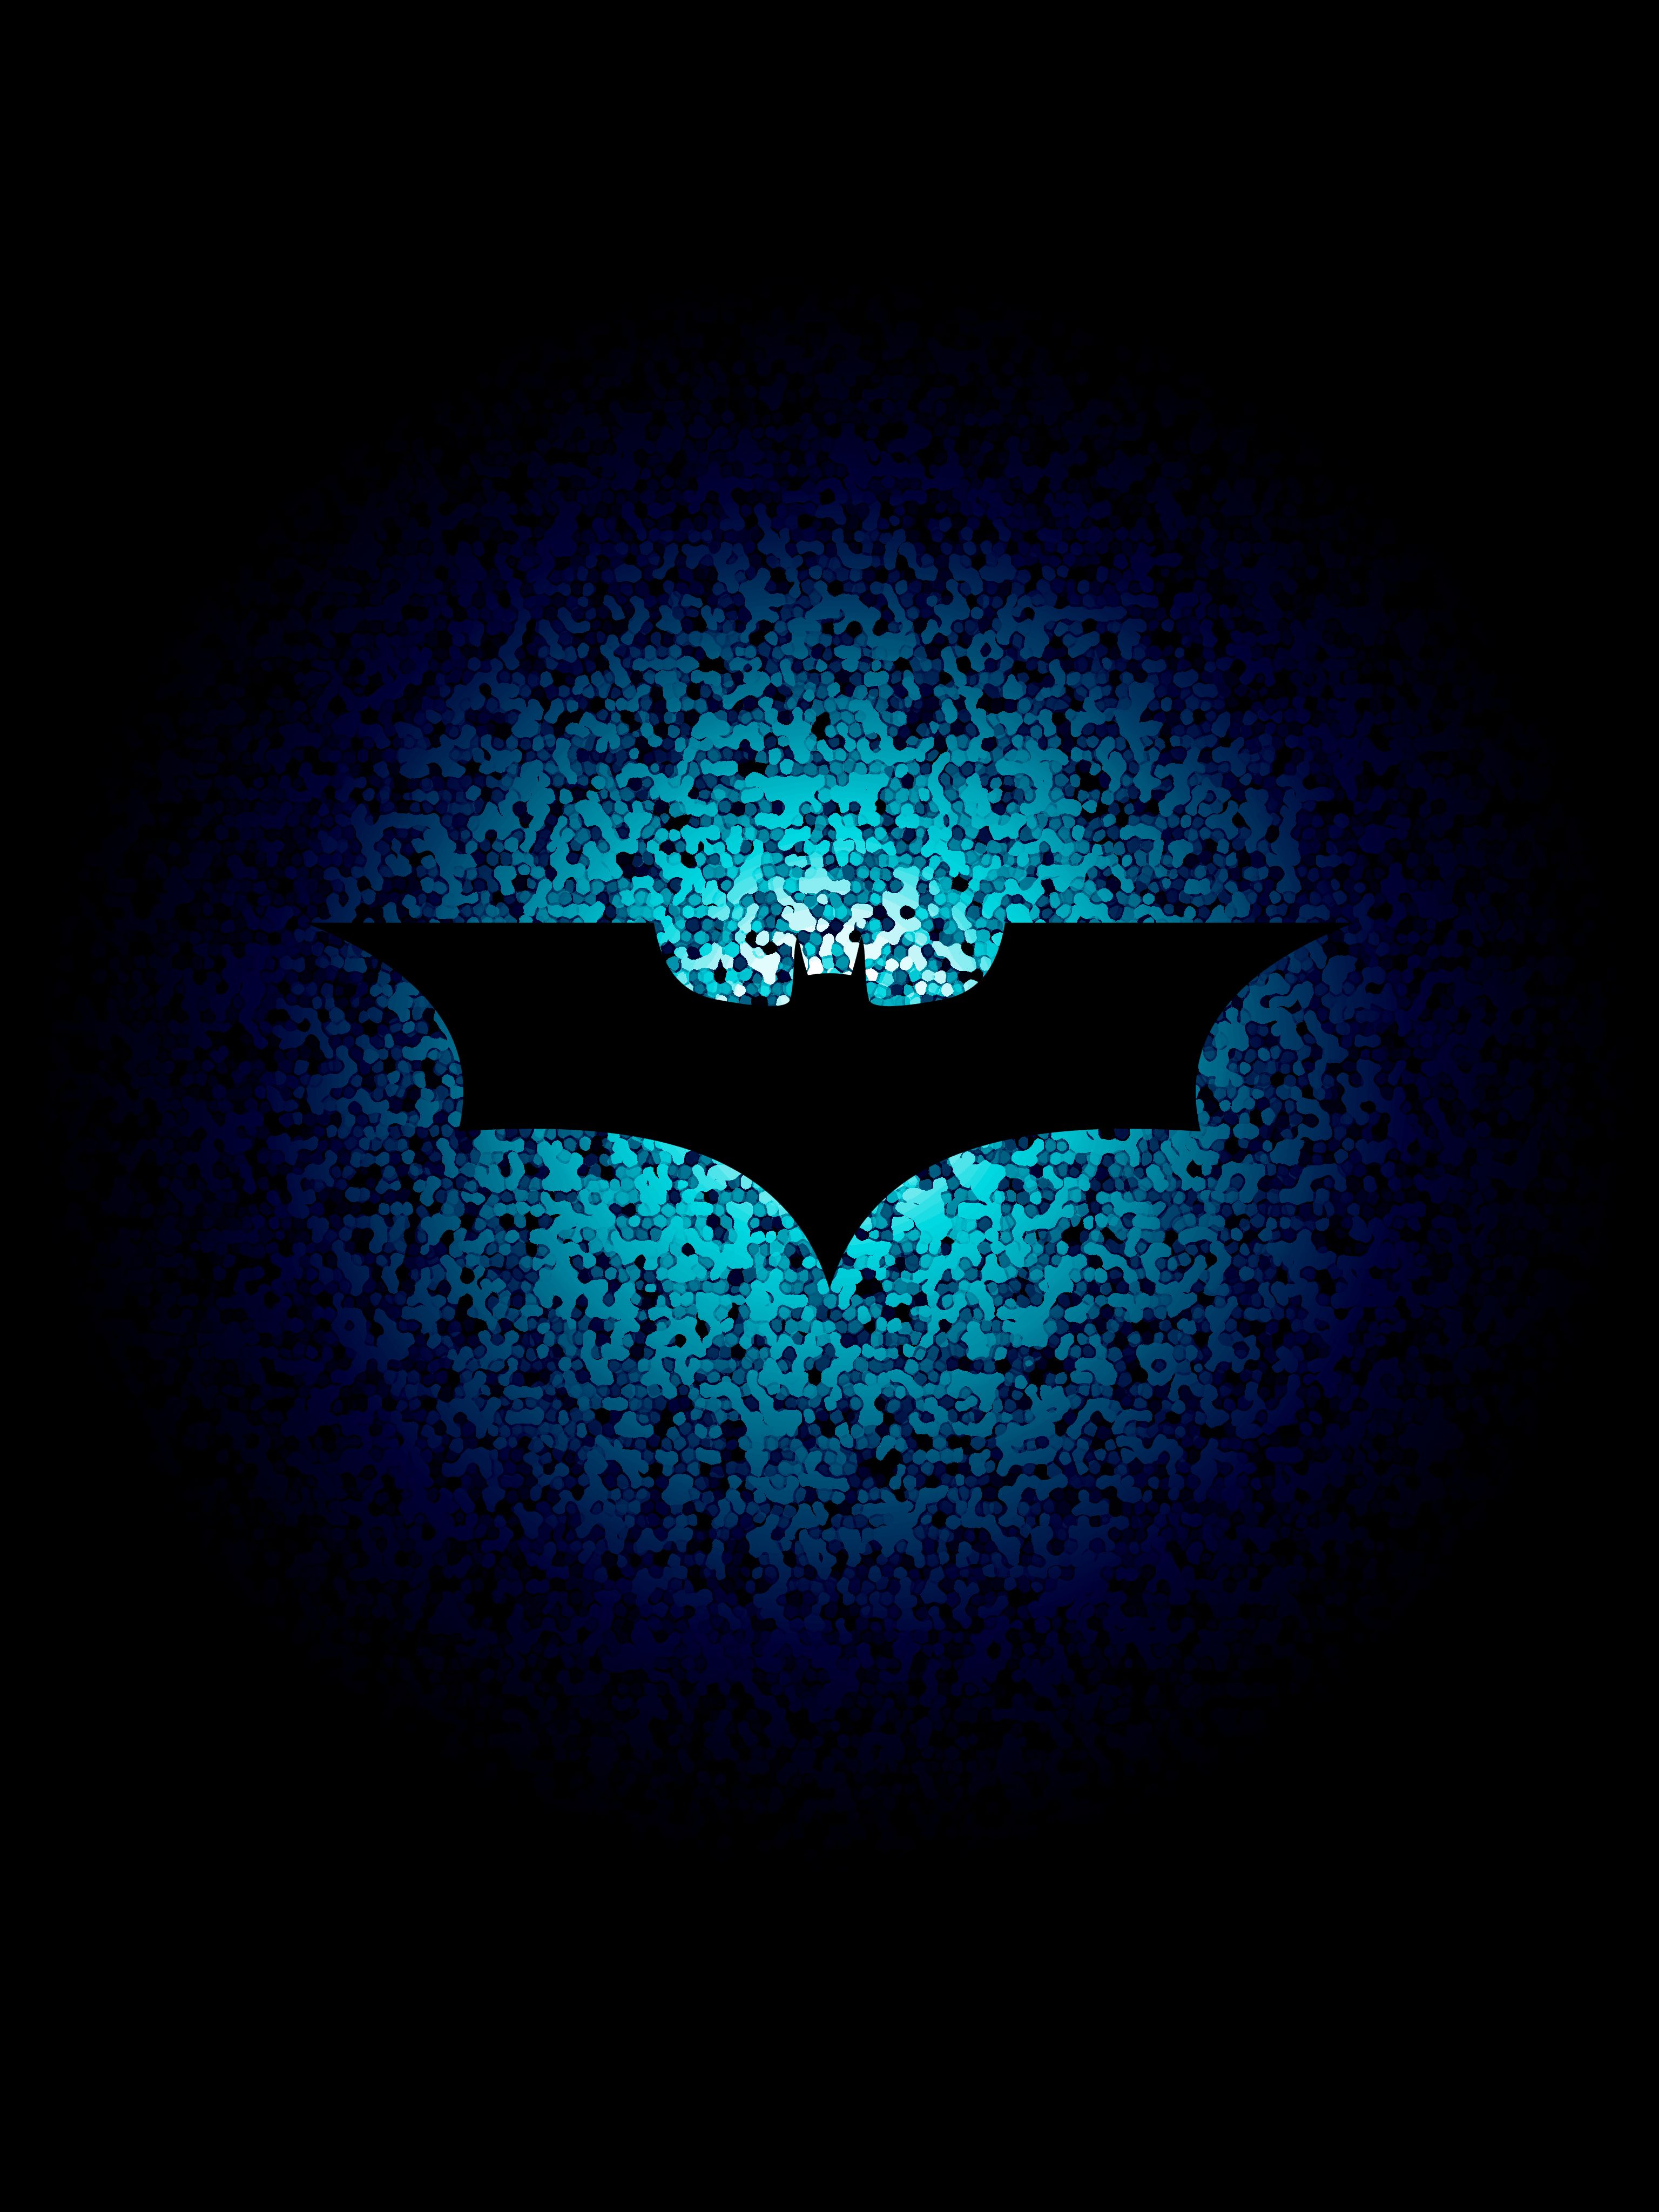 The Dark Knight Rises v.2 - HD Wallpaper by ShikharSrivastava on ...